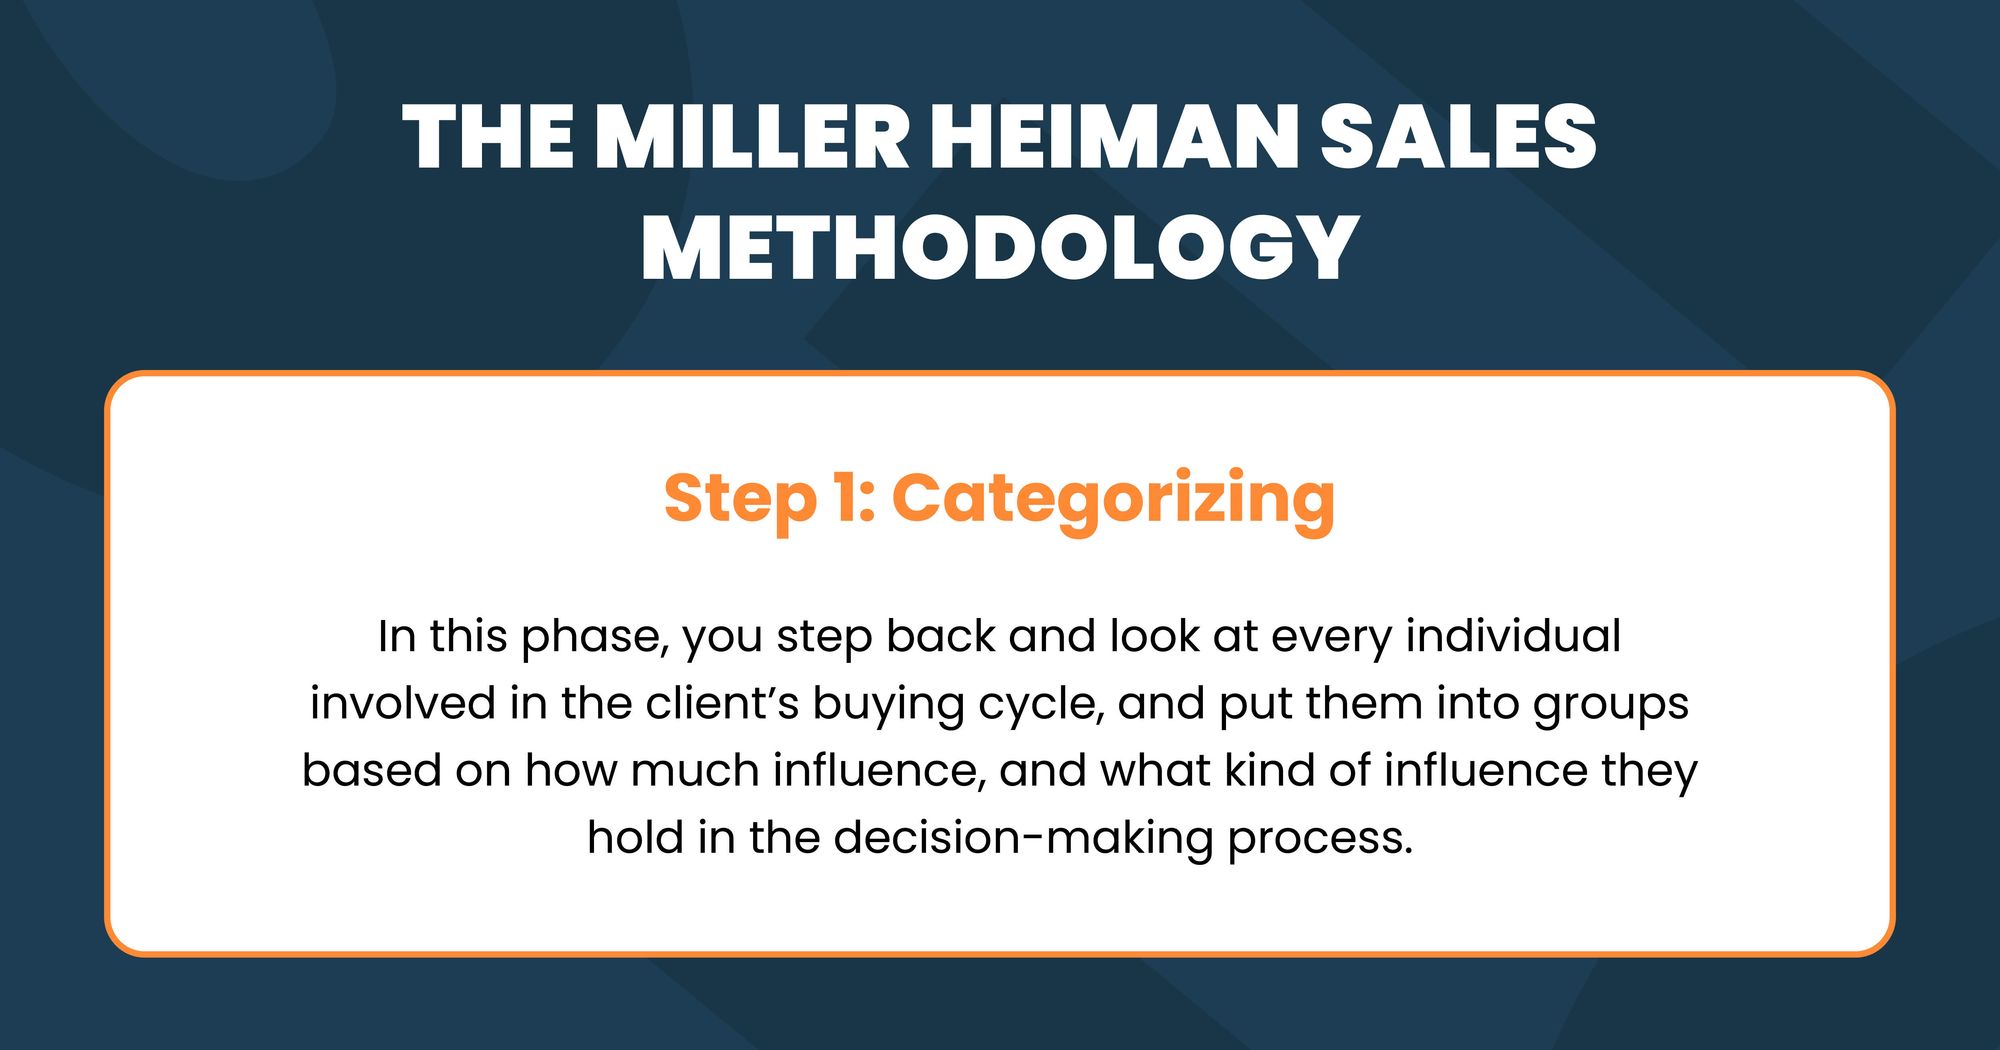 Miller He-man sales methodology step 1: categorizing